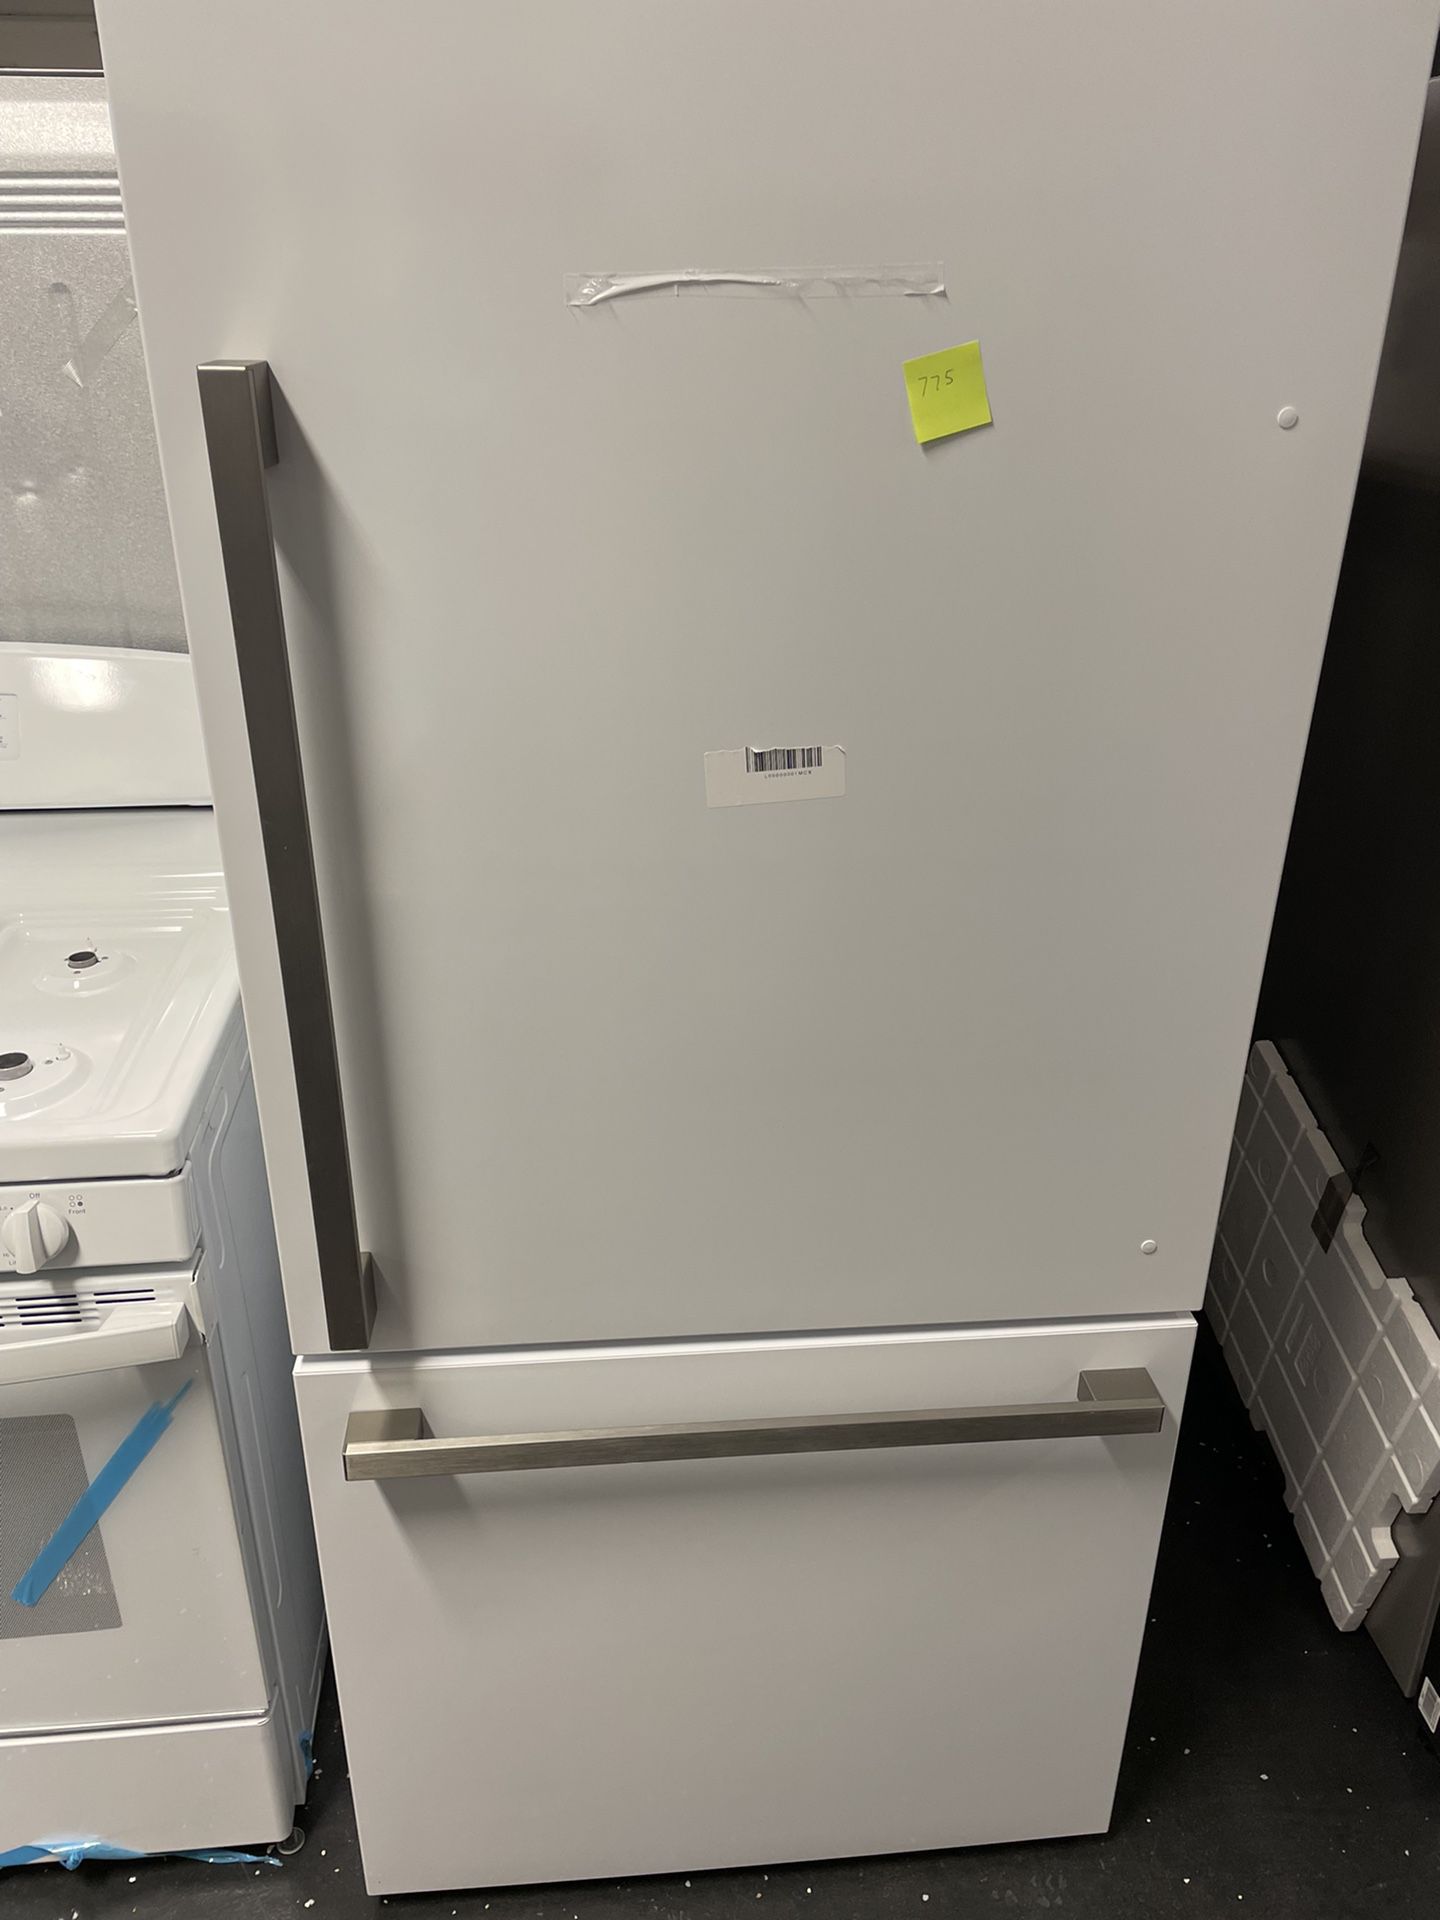 Brand new refrigerators